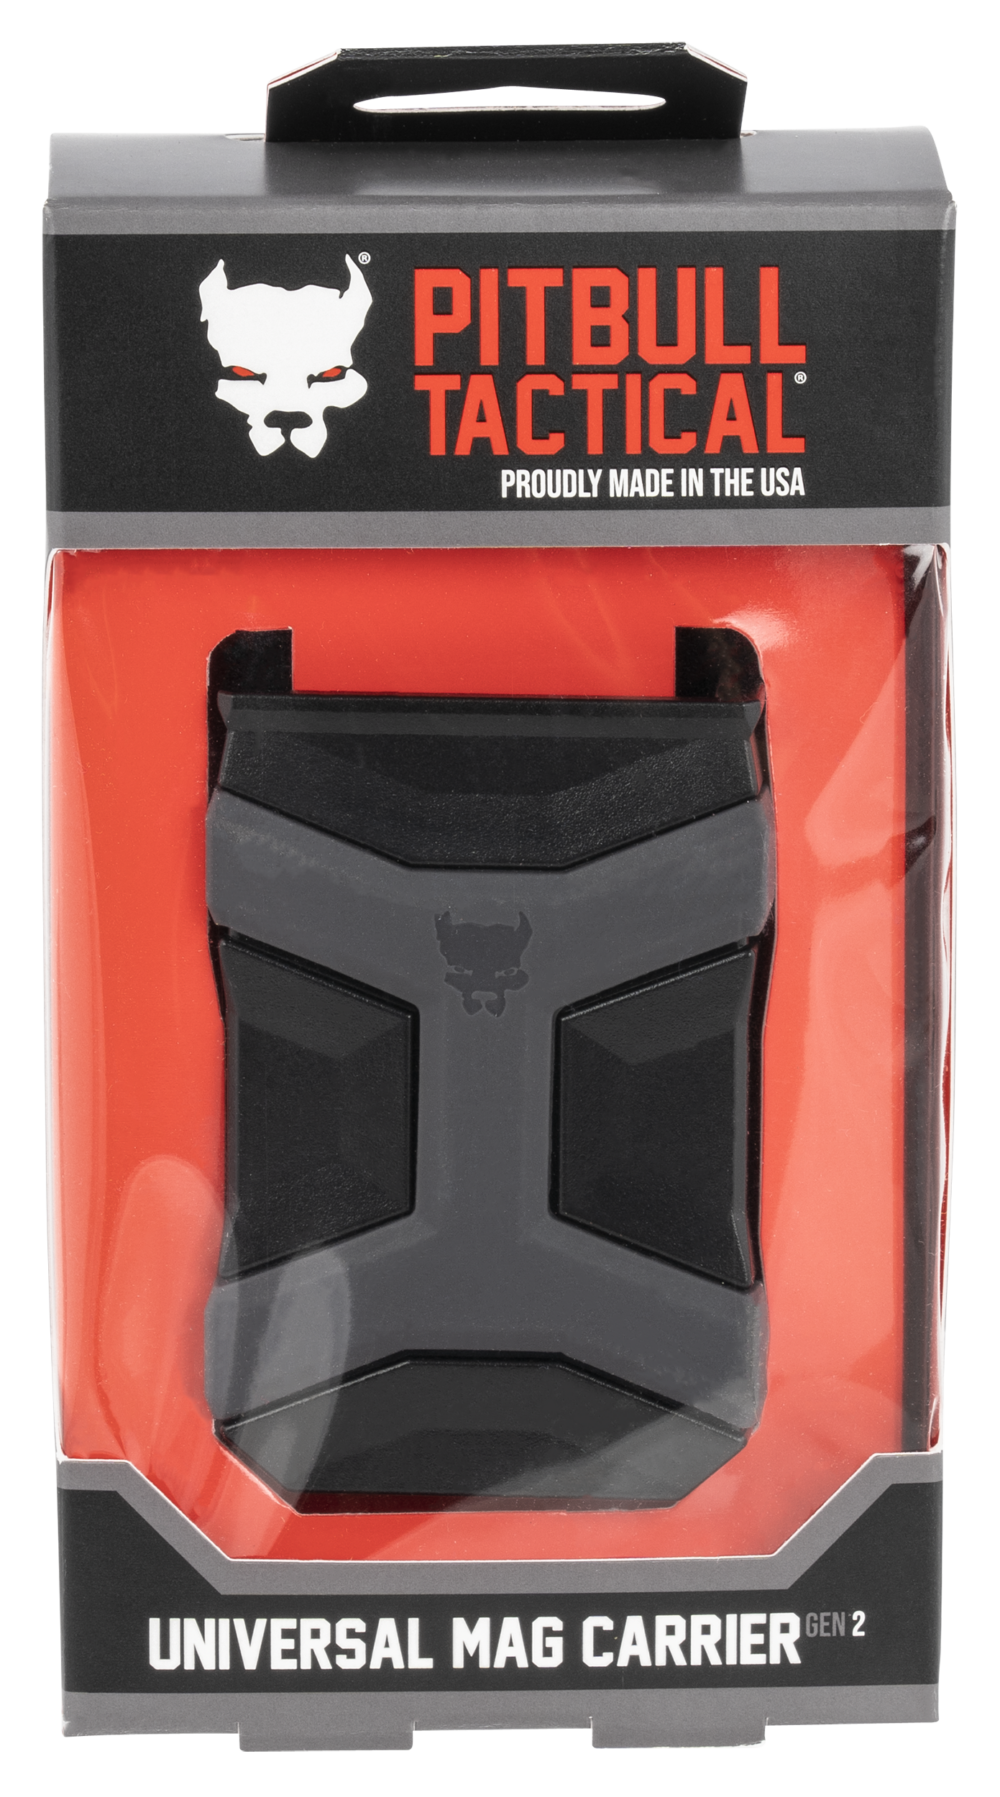 Pitbull Tactical Universal Mag Carrier, IWB/OWB, Multi-Caliber, Black Polymer